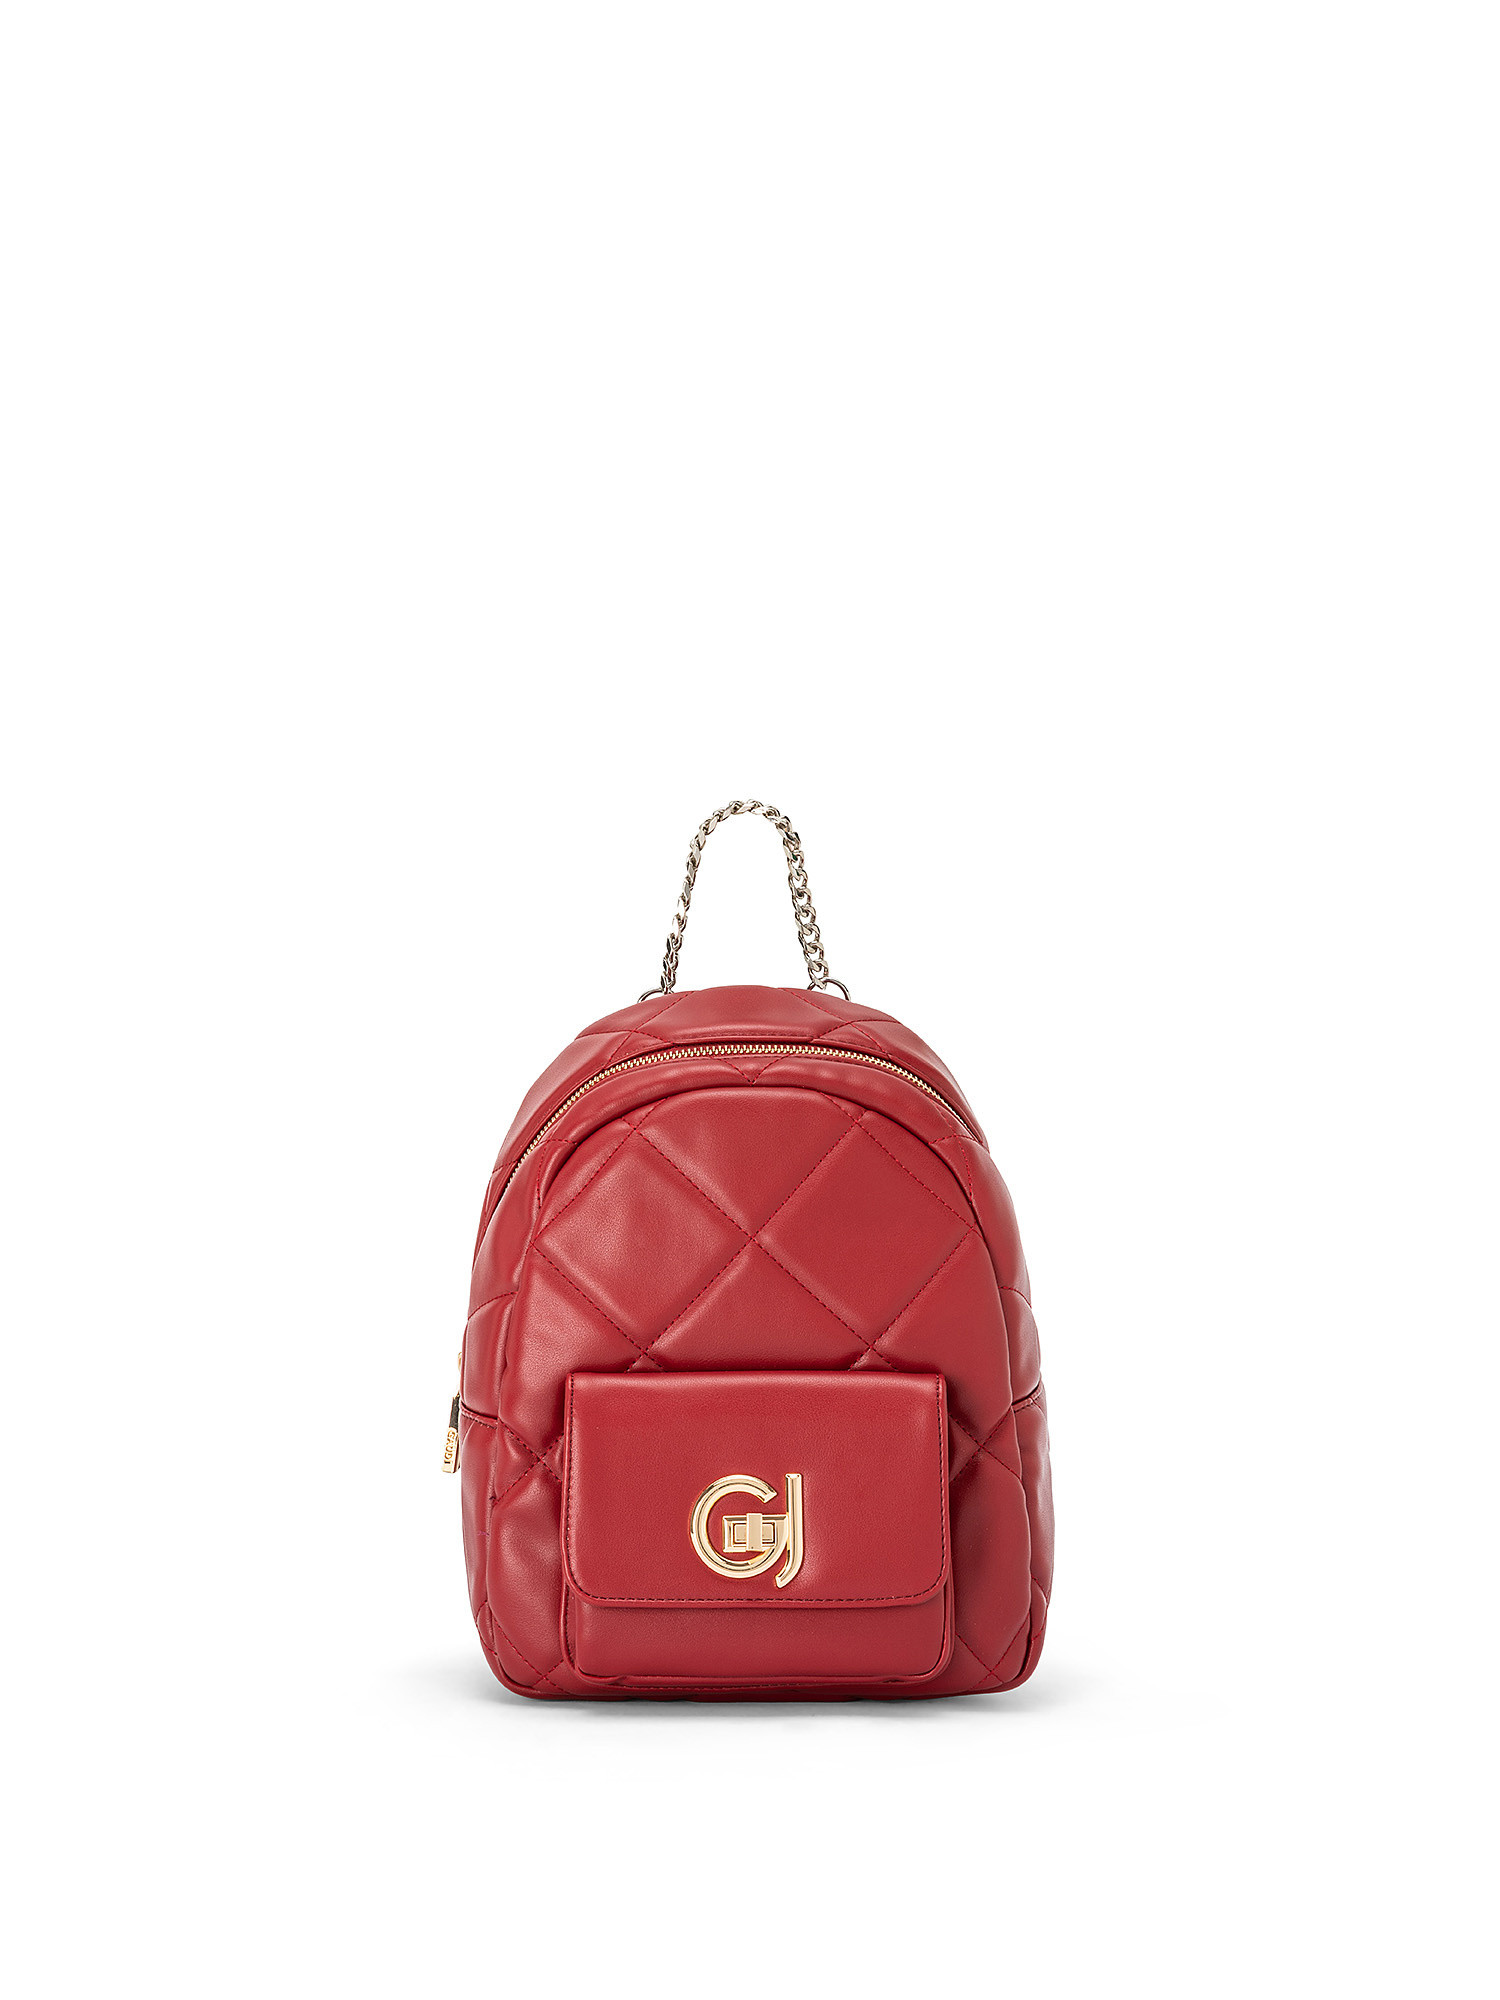 Gaudì - Moon backpack, Dark Red, large image number 0